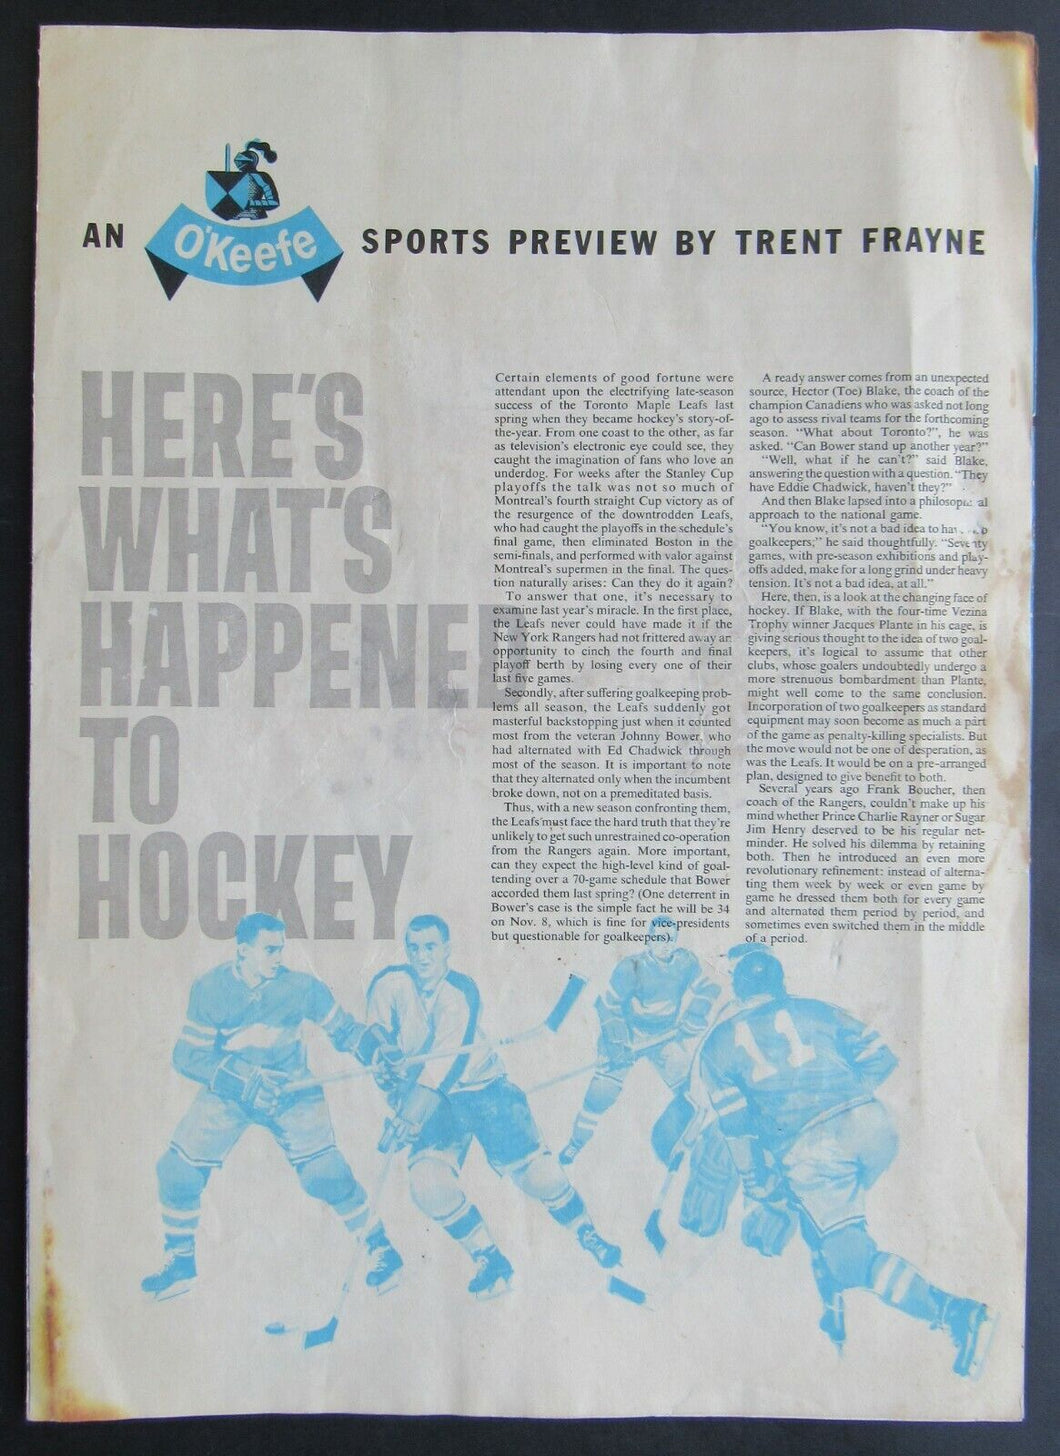 1959 NHL Sheet Insert - Toronto Telegram, TV Weekly Promotion Of O'Keefe Brewery